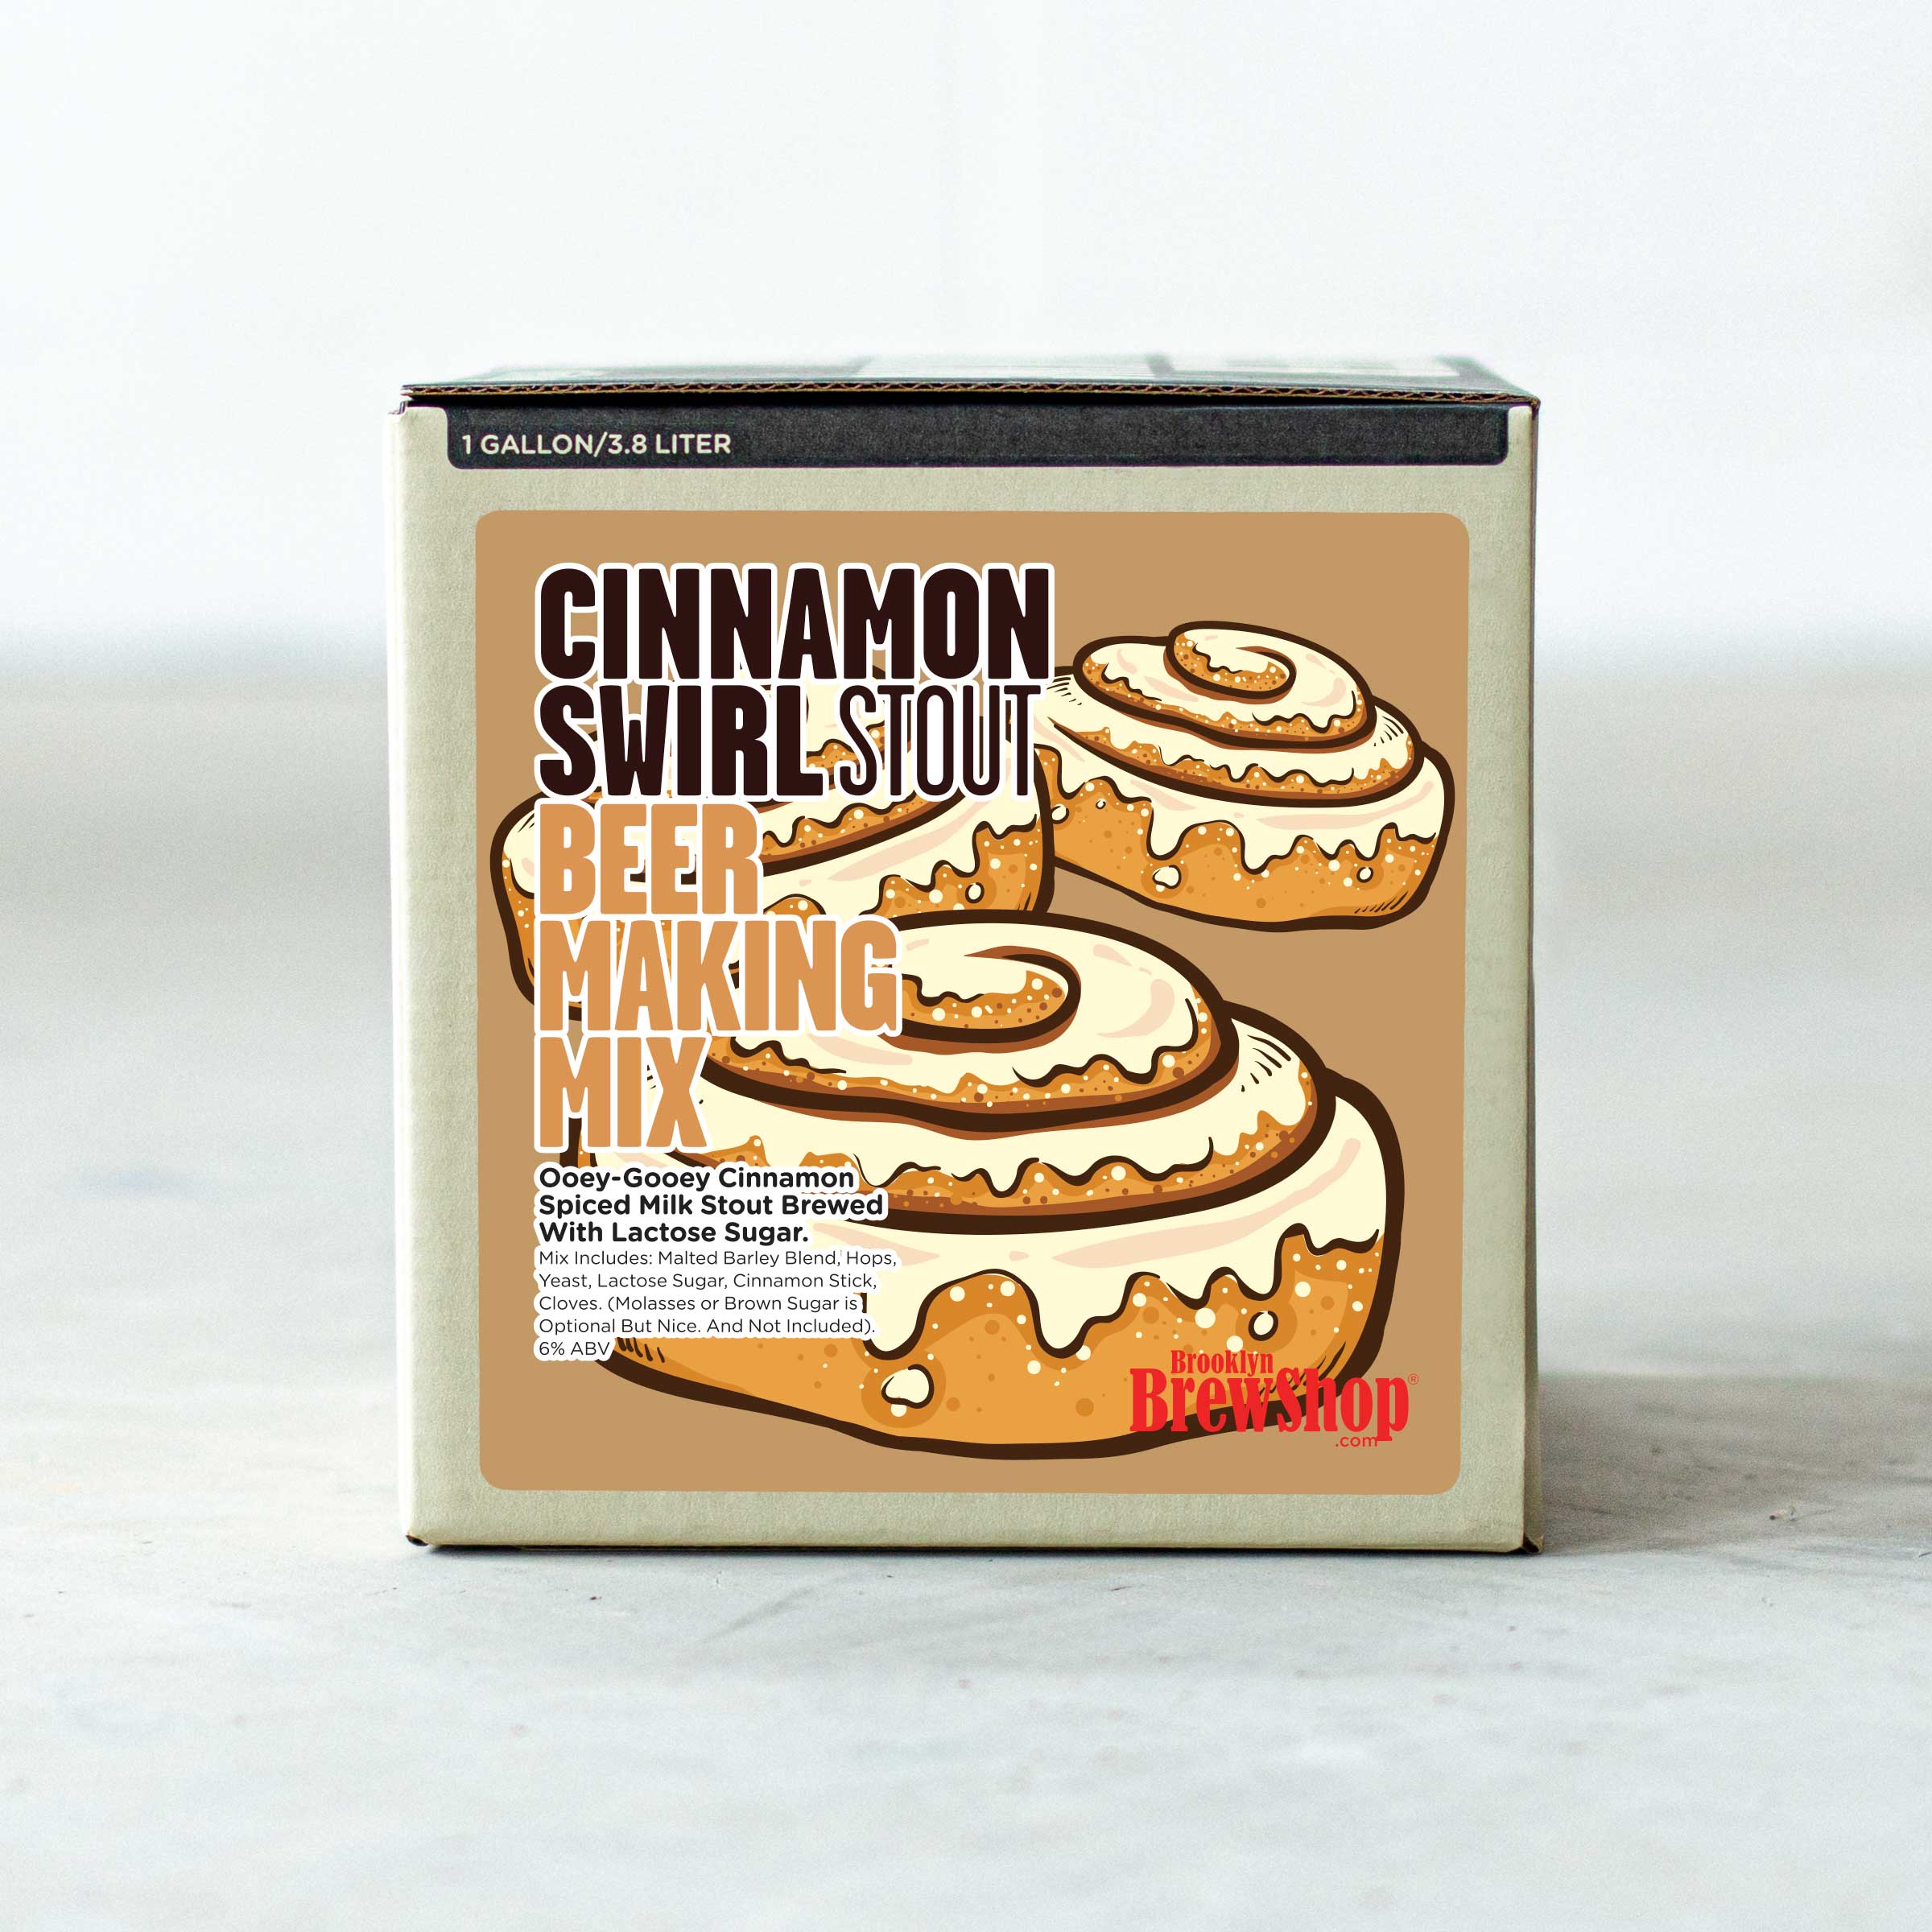 Cinnamon Swirl Stout: Beer Making Mix